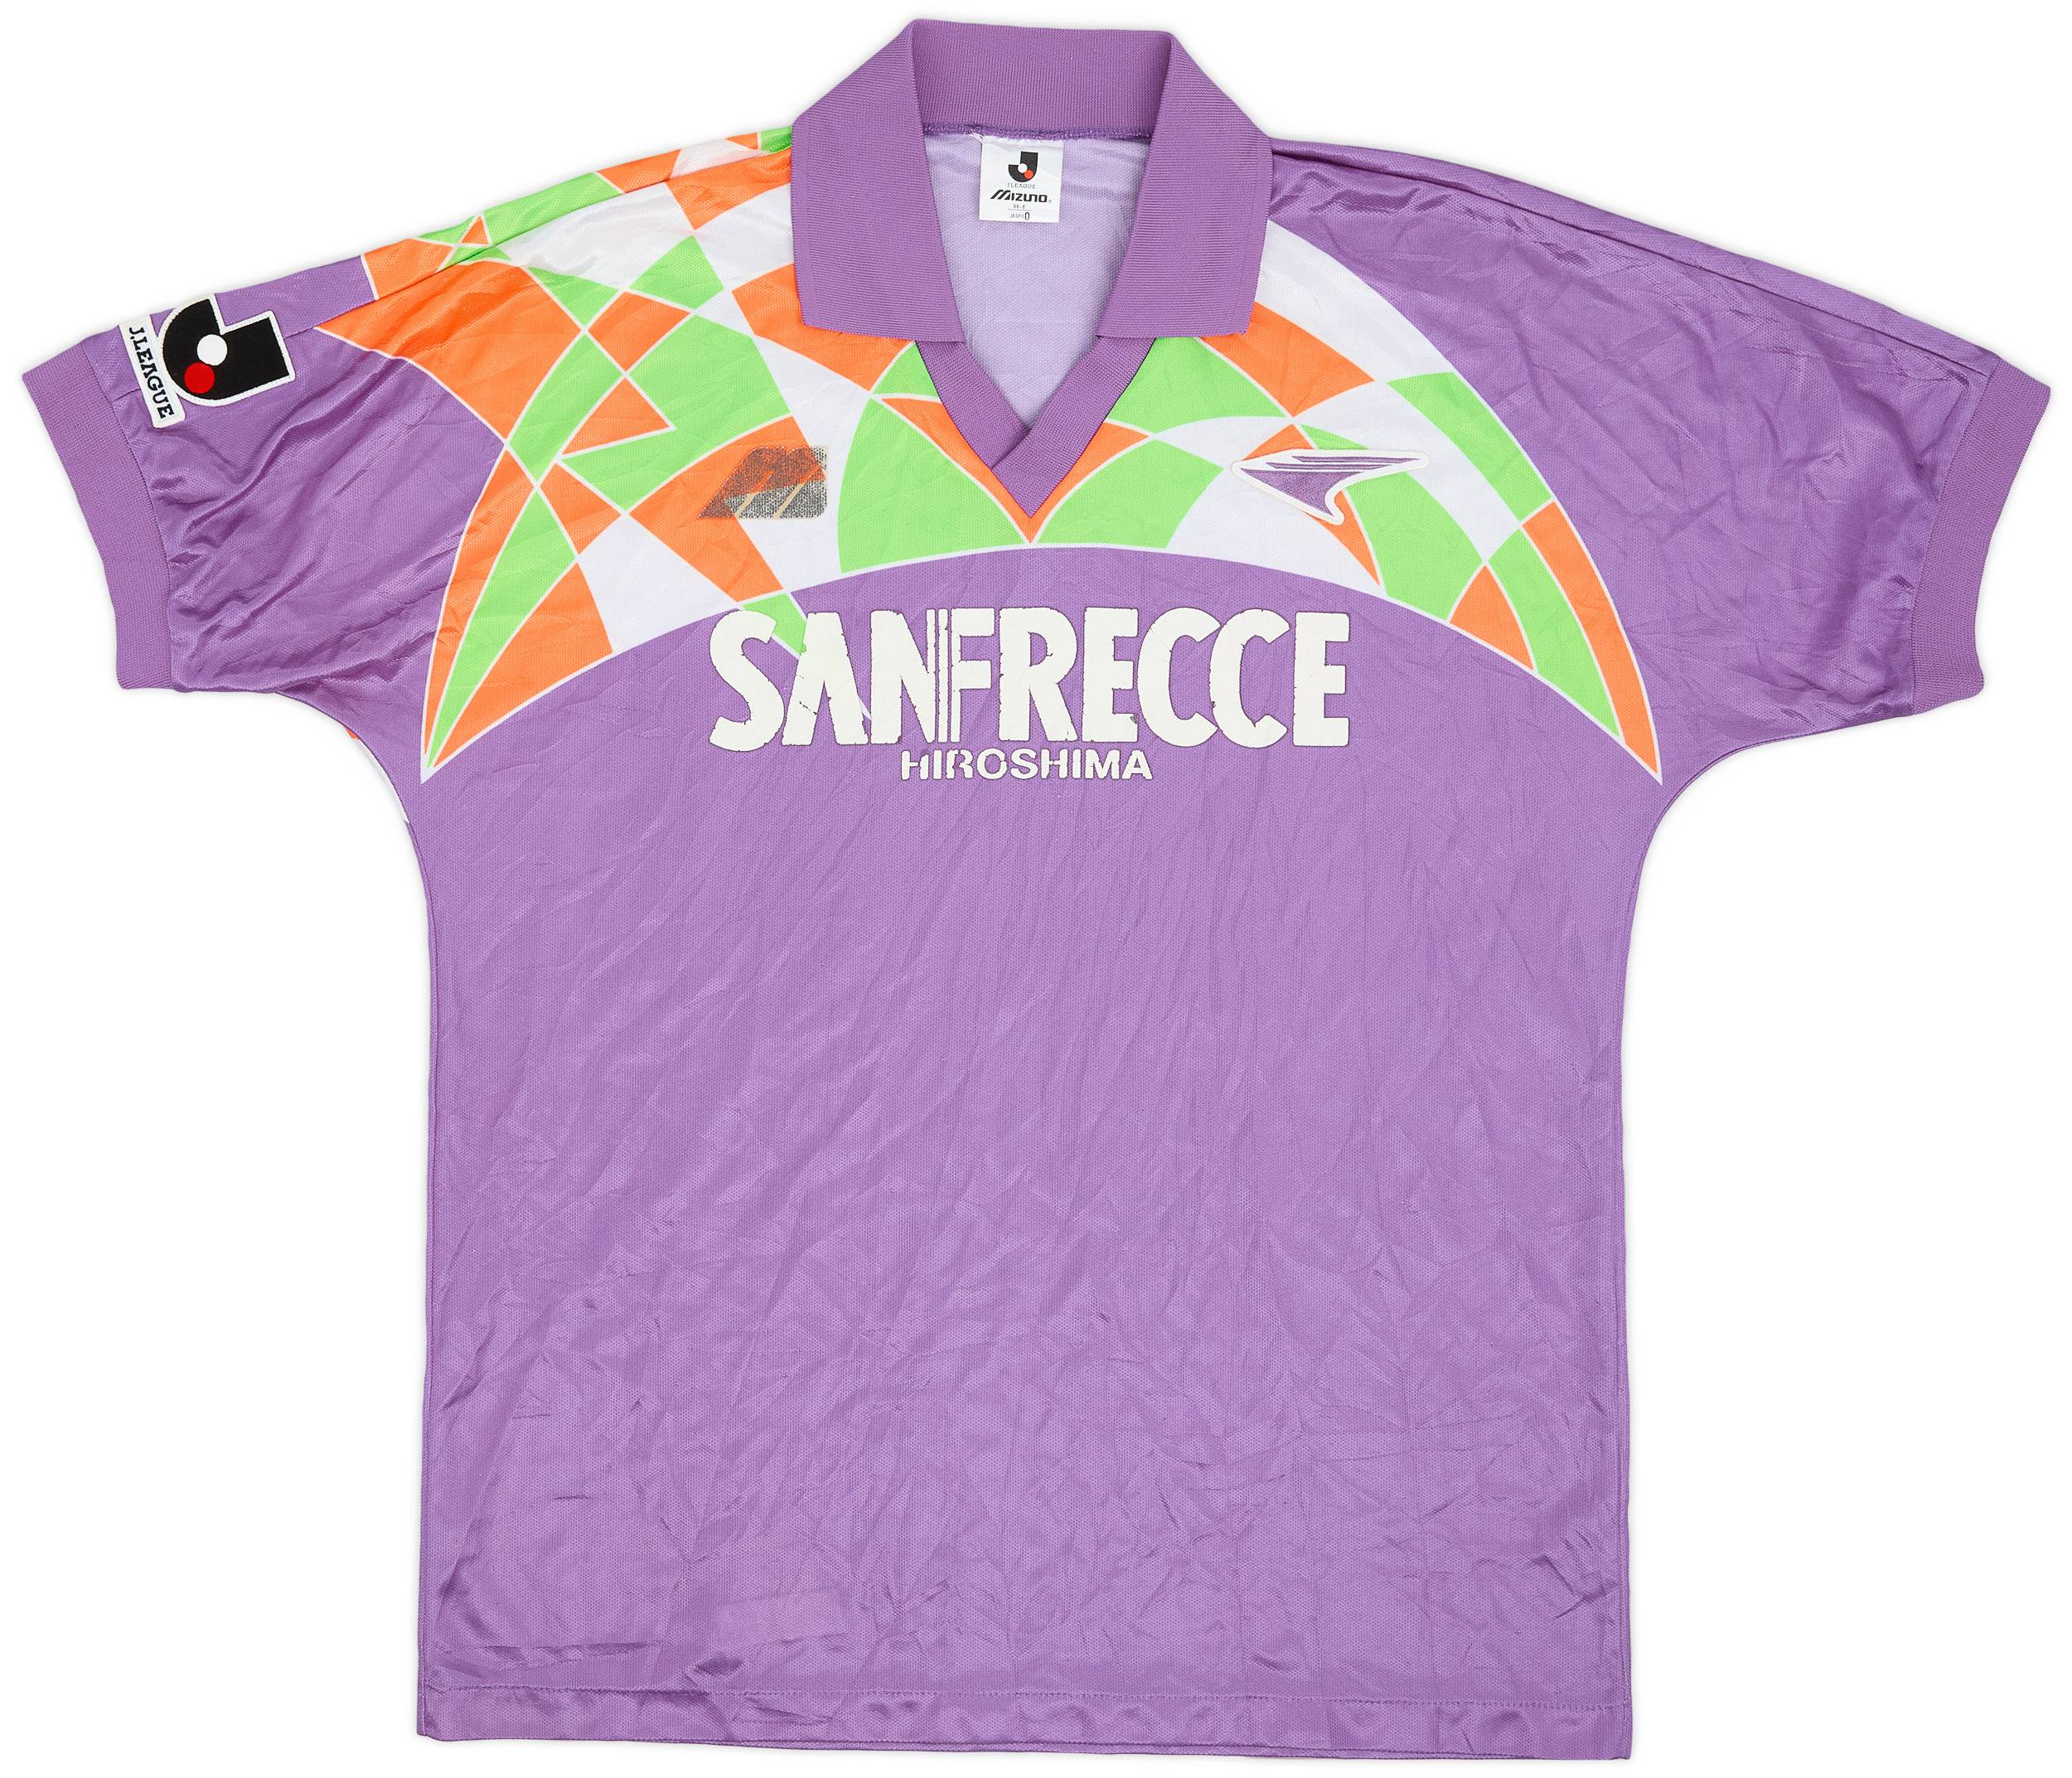 1993 Sanfrecce Hiroshima Home Shirt - 5/10 - (L)